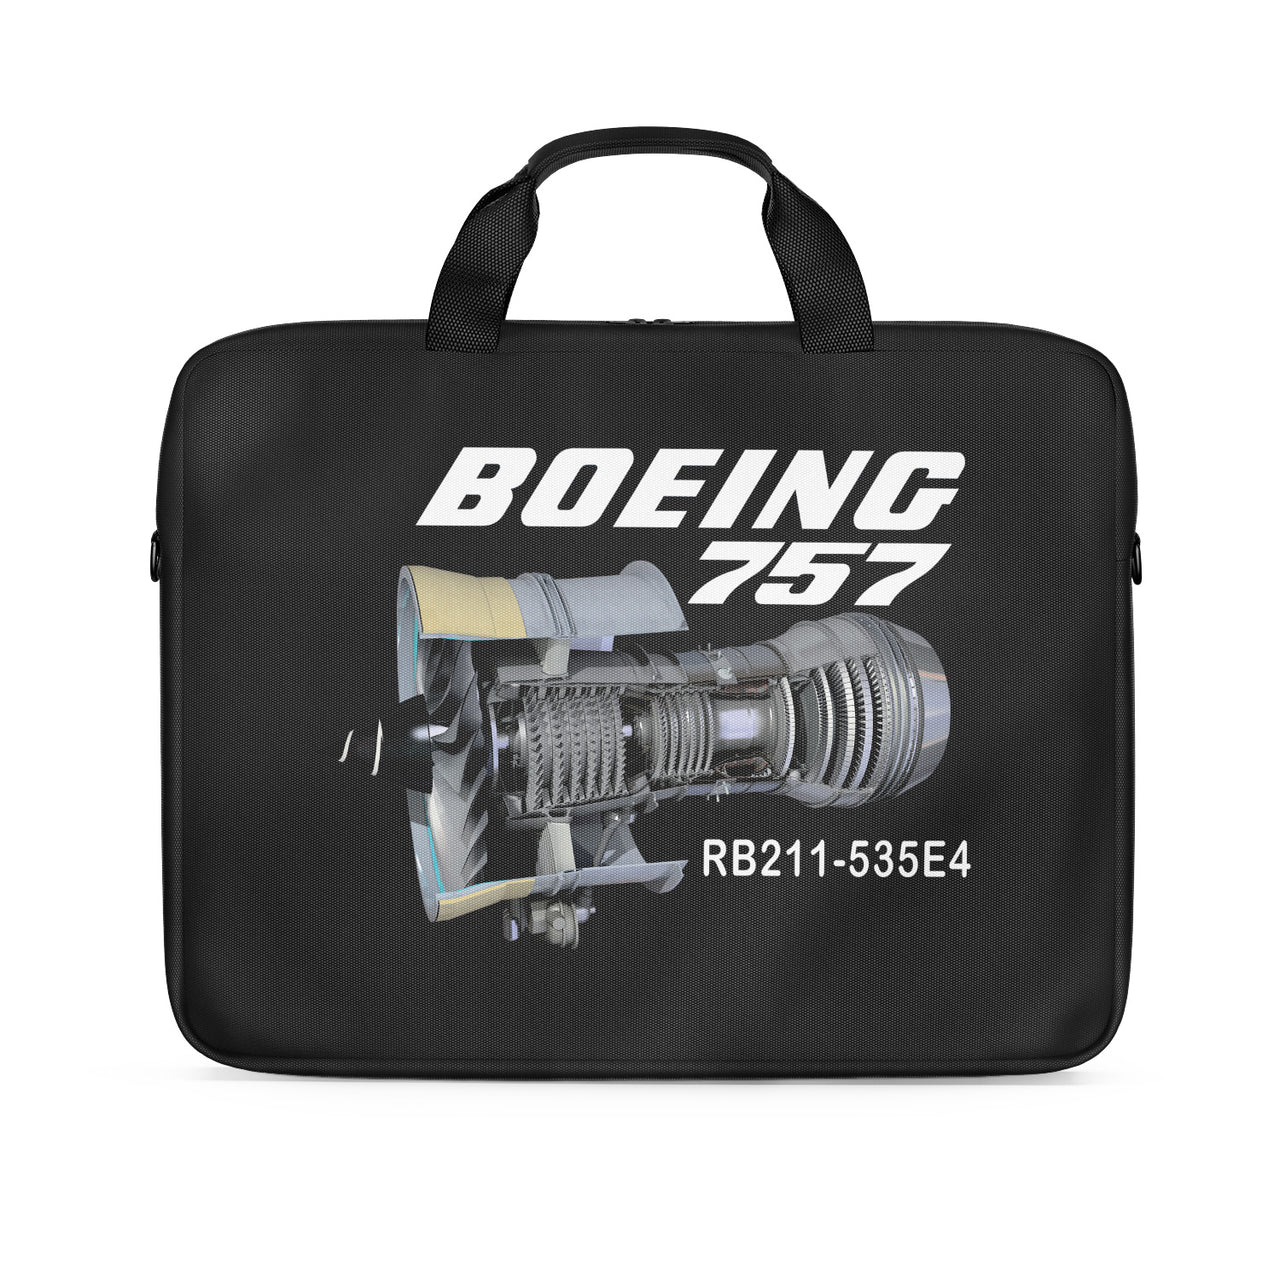 Boeing 757 & Rolls Royce Engine (RB211) Designed Laptop & Tablet Bags